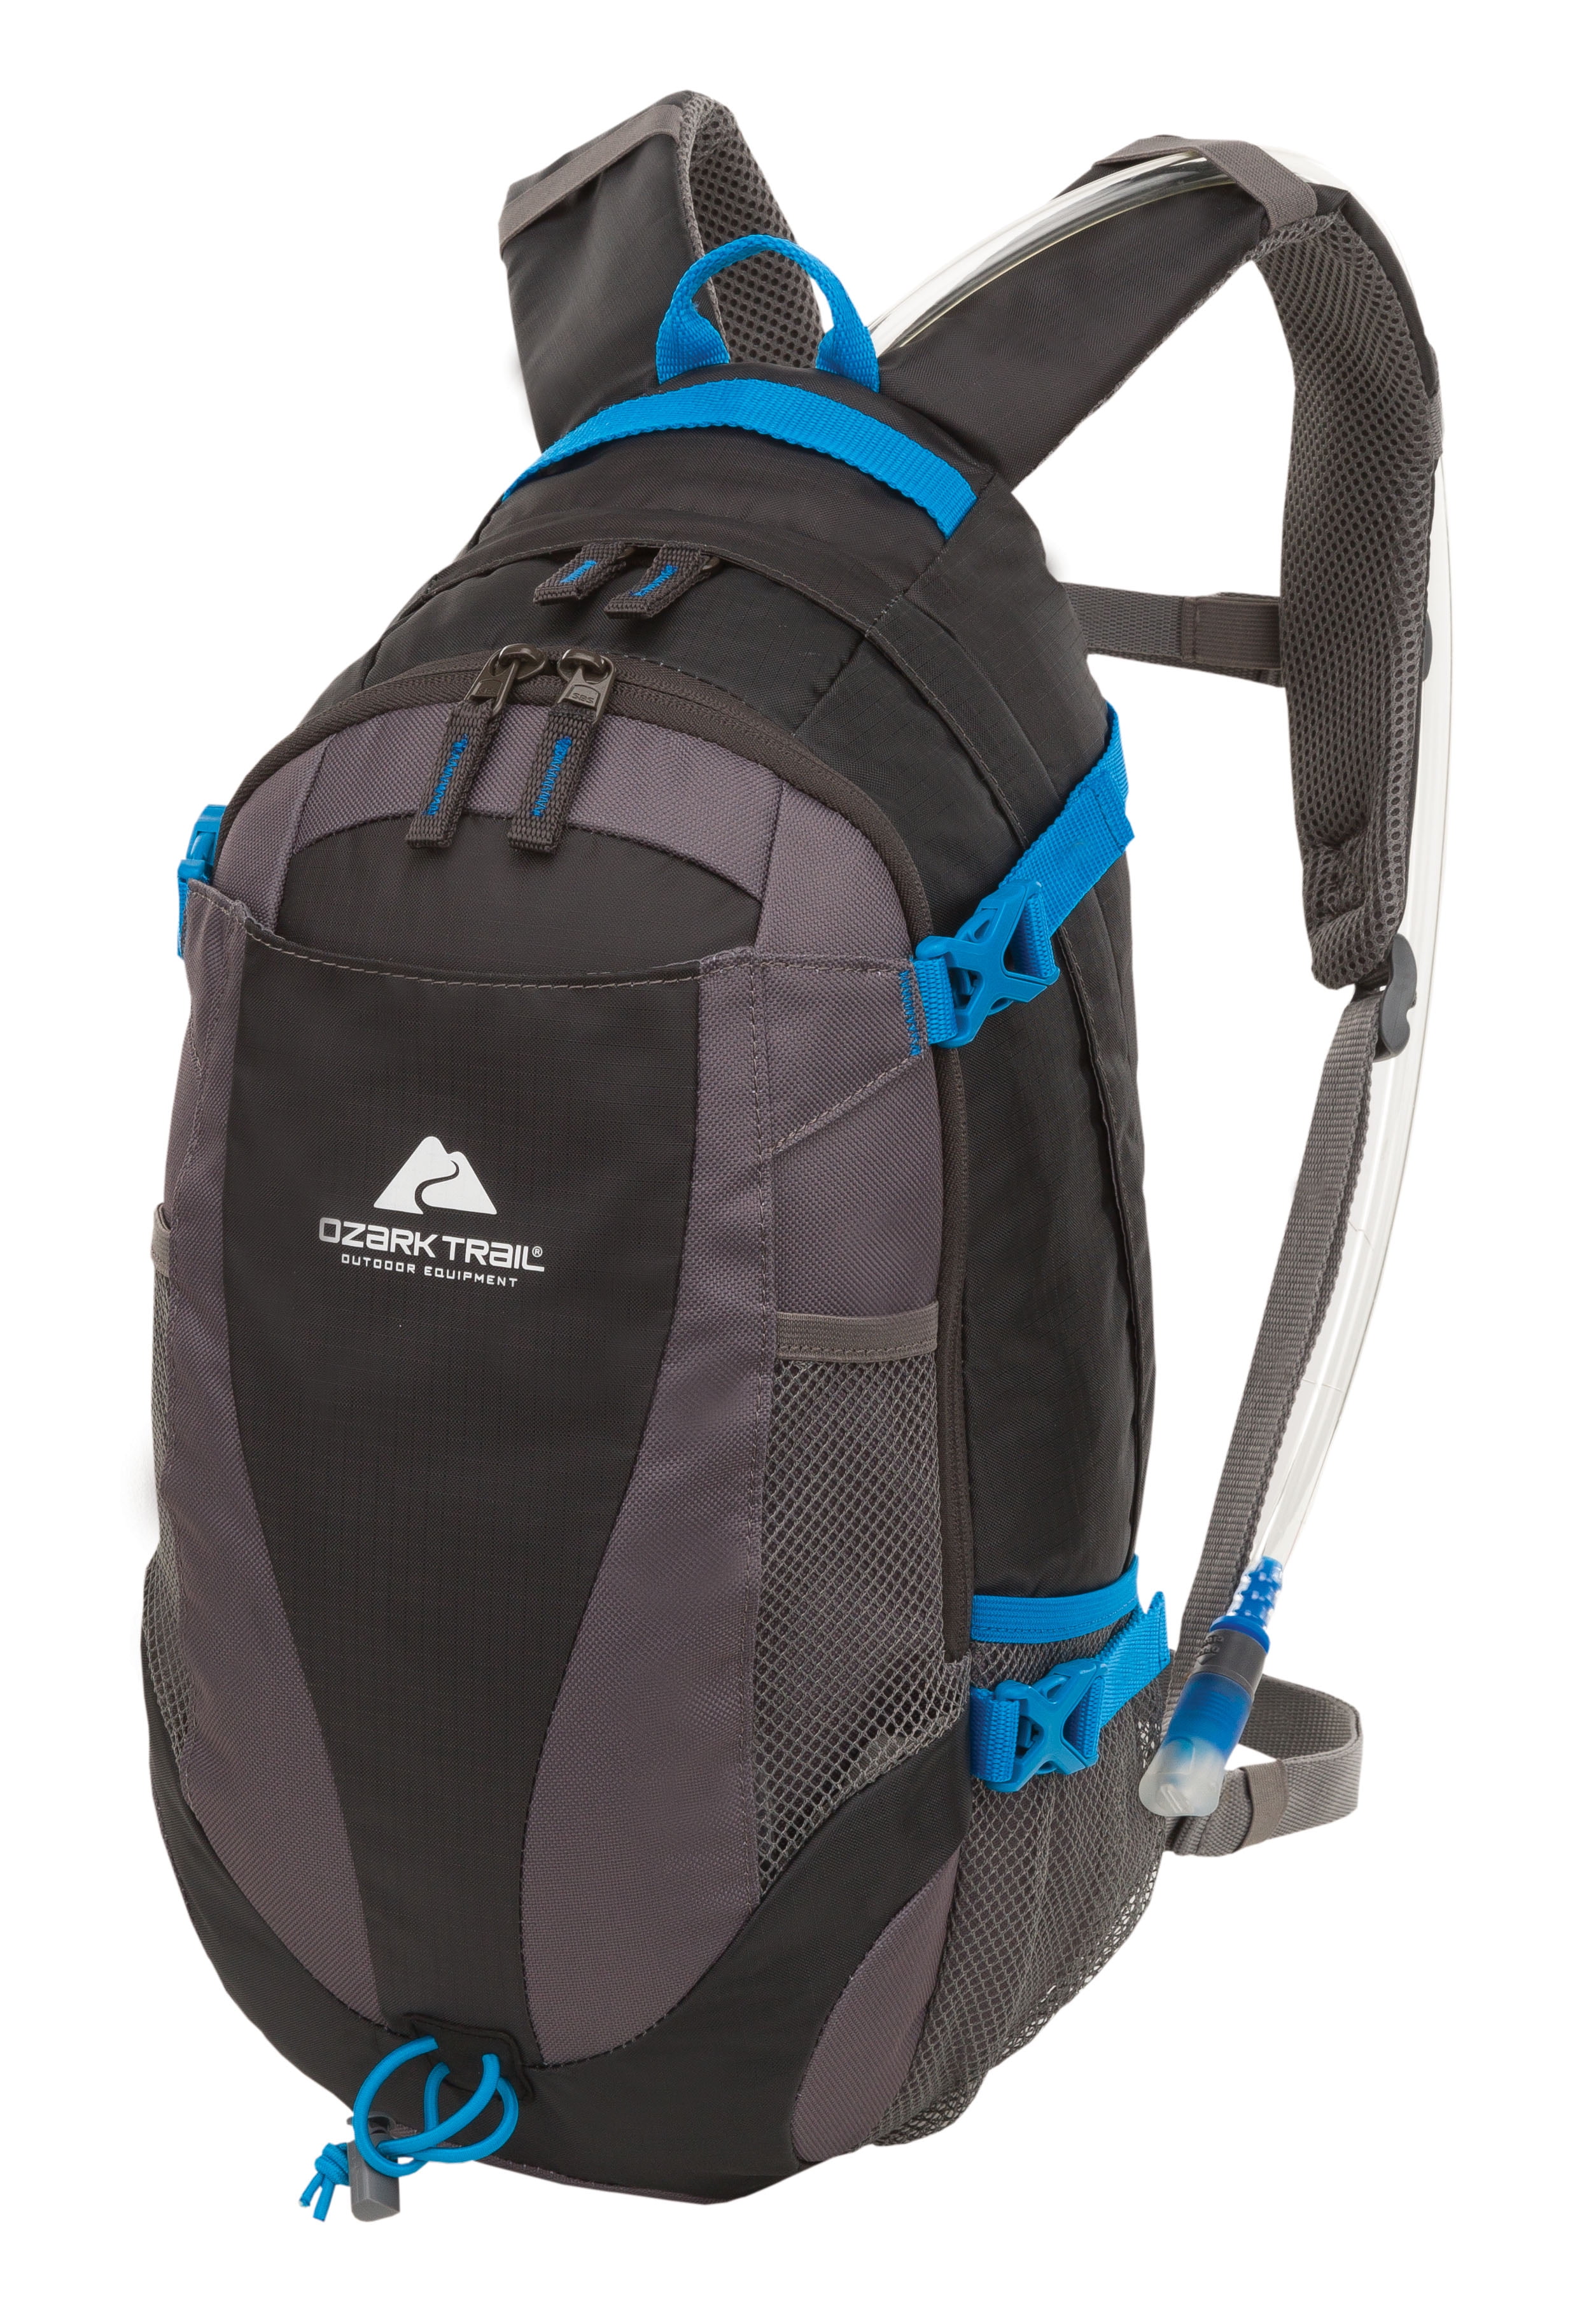 Ozark Trail 35L Silverthorne Hiking Backpack, Hydration-Compatible ...